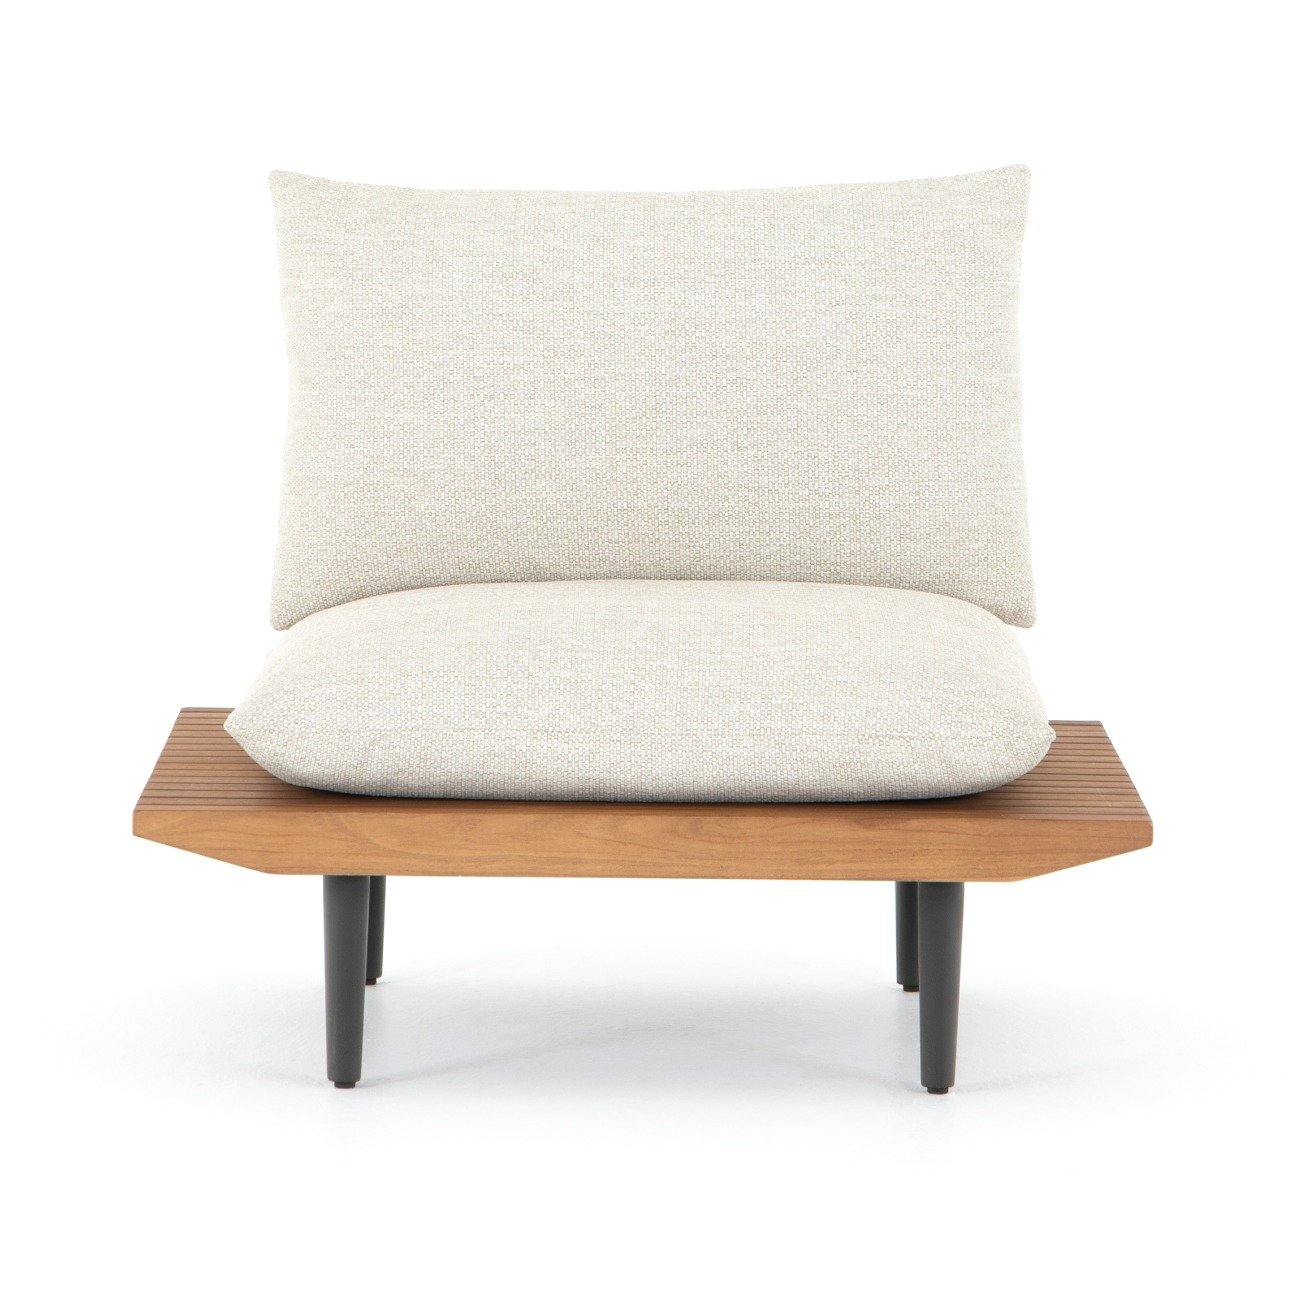 Simmons Outdoor Chair - Reimagine Designs - Outdoor, outdoor armchair, Outdoor Armchairs, outdoor chair